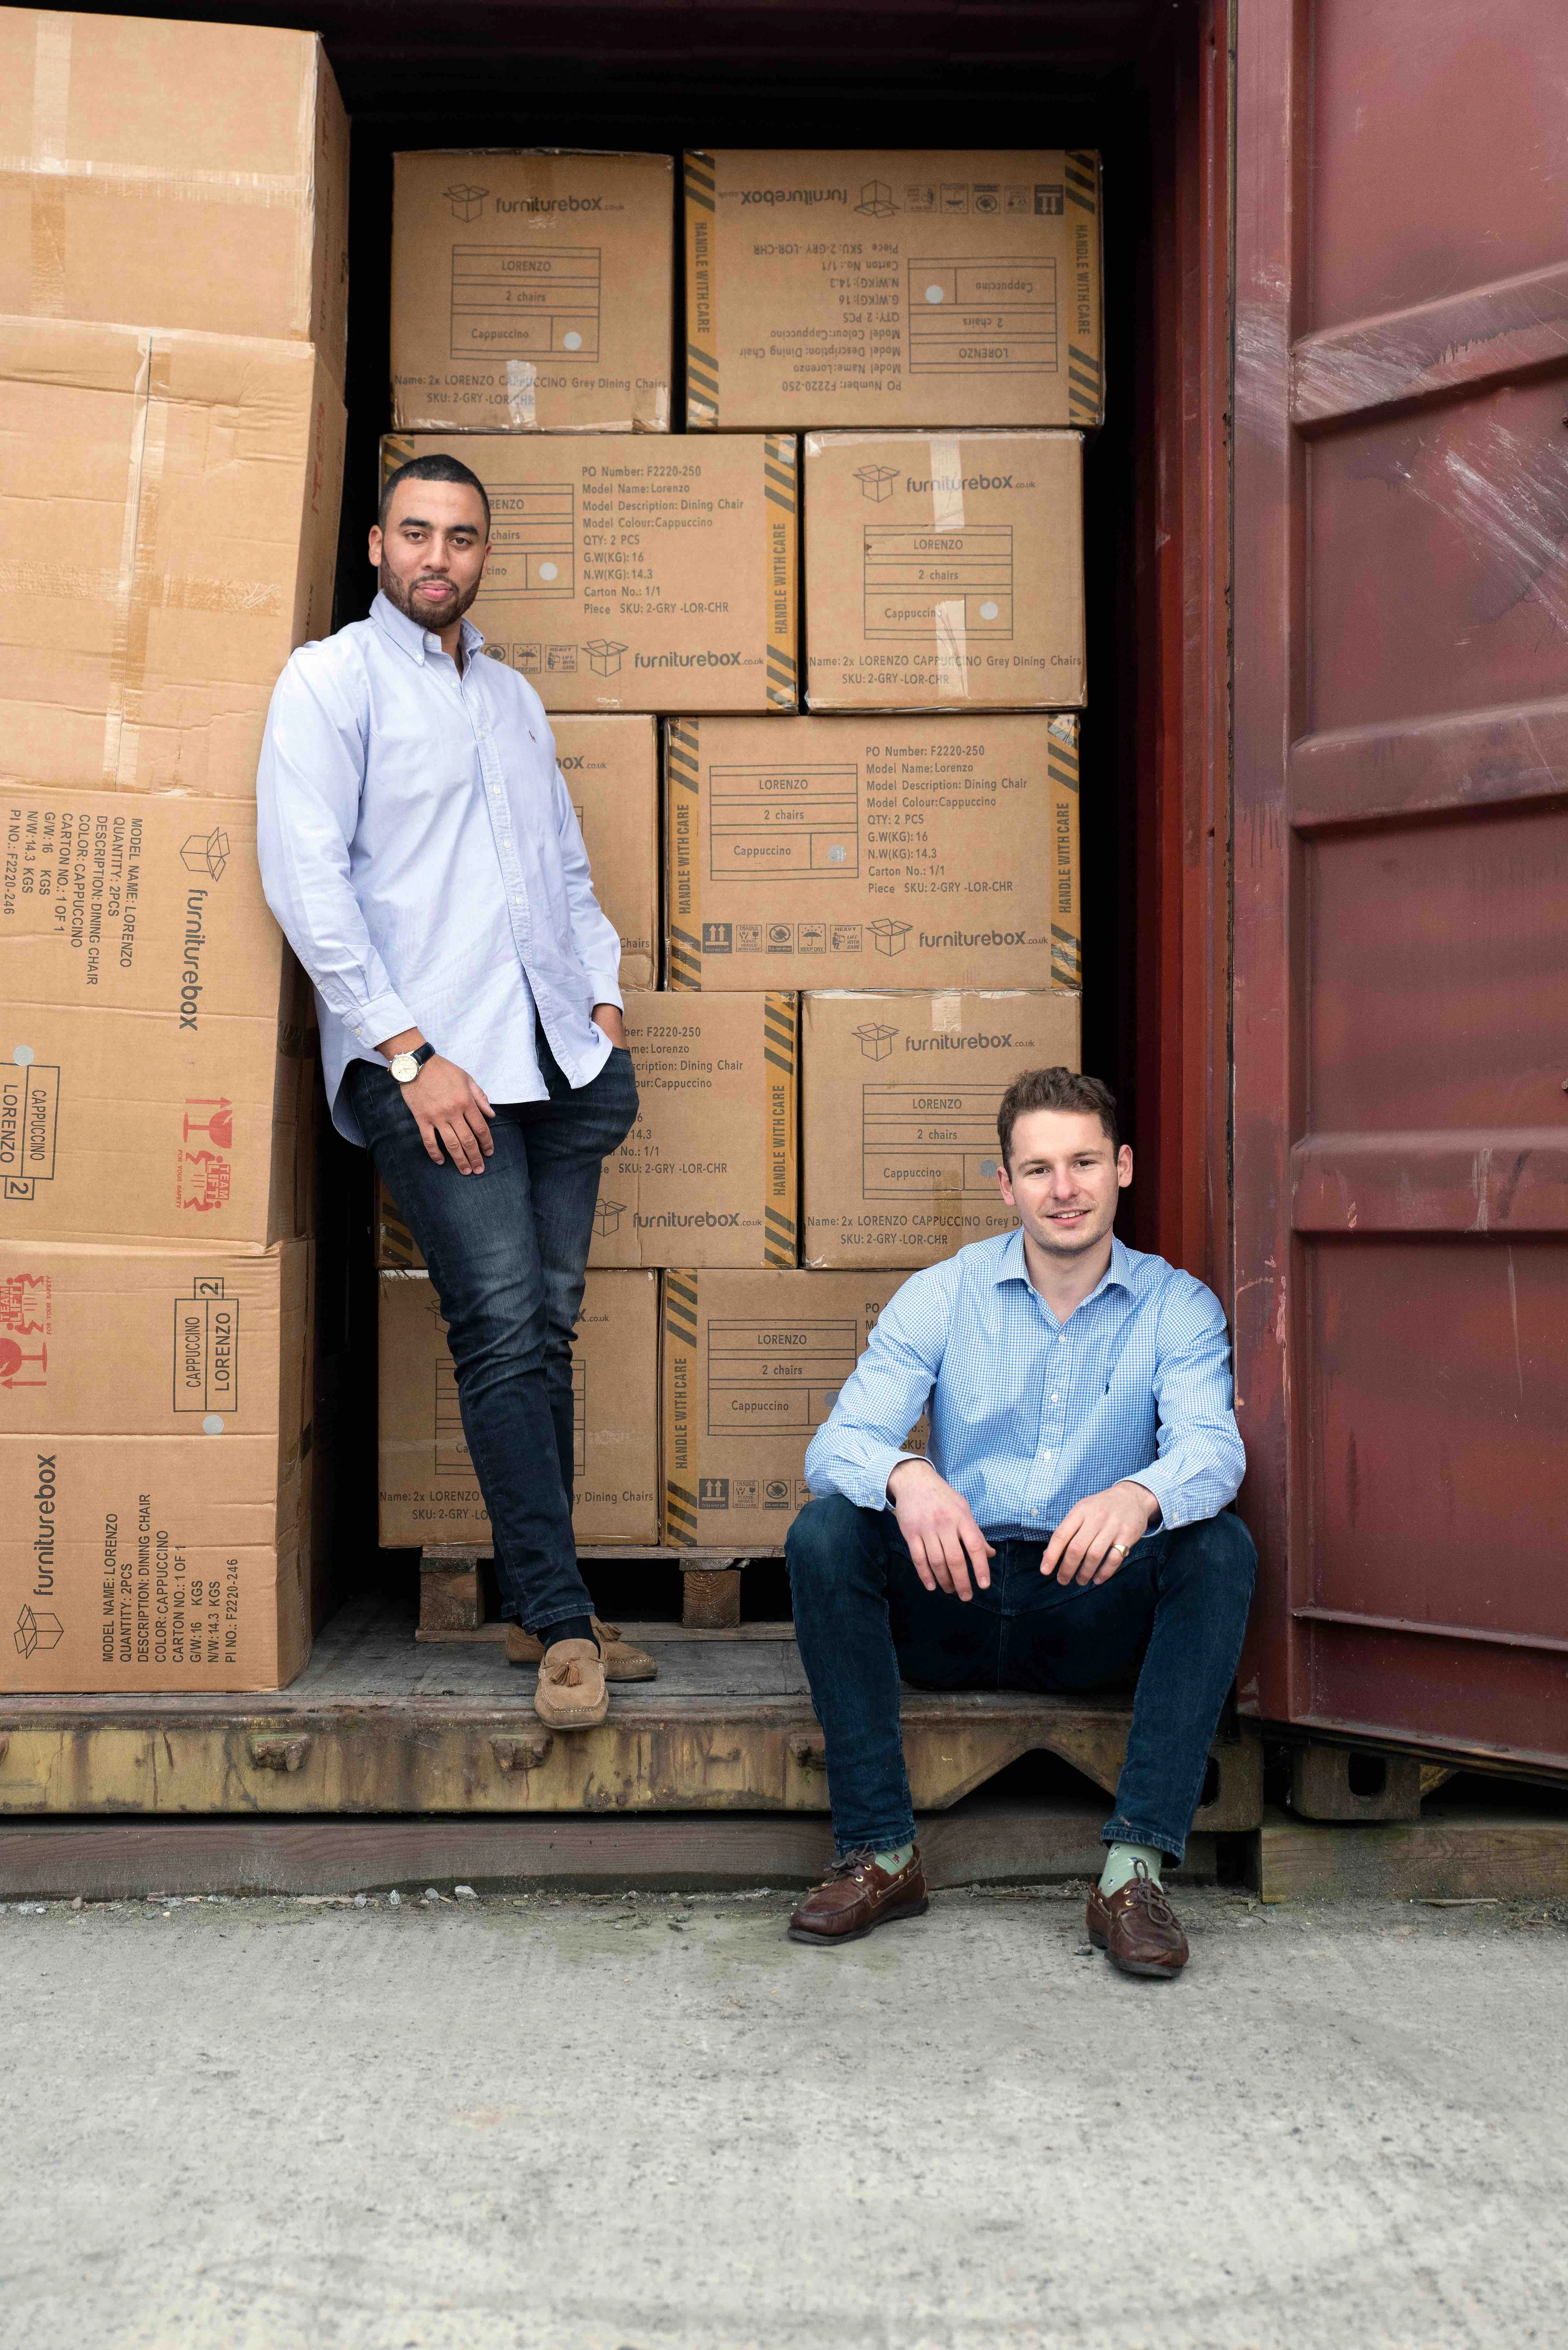 Furniturebox founders Dan Beckles and Monty George 